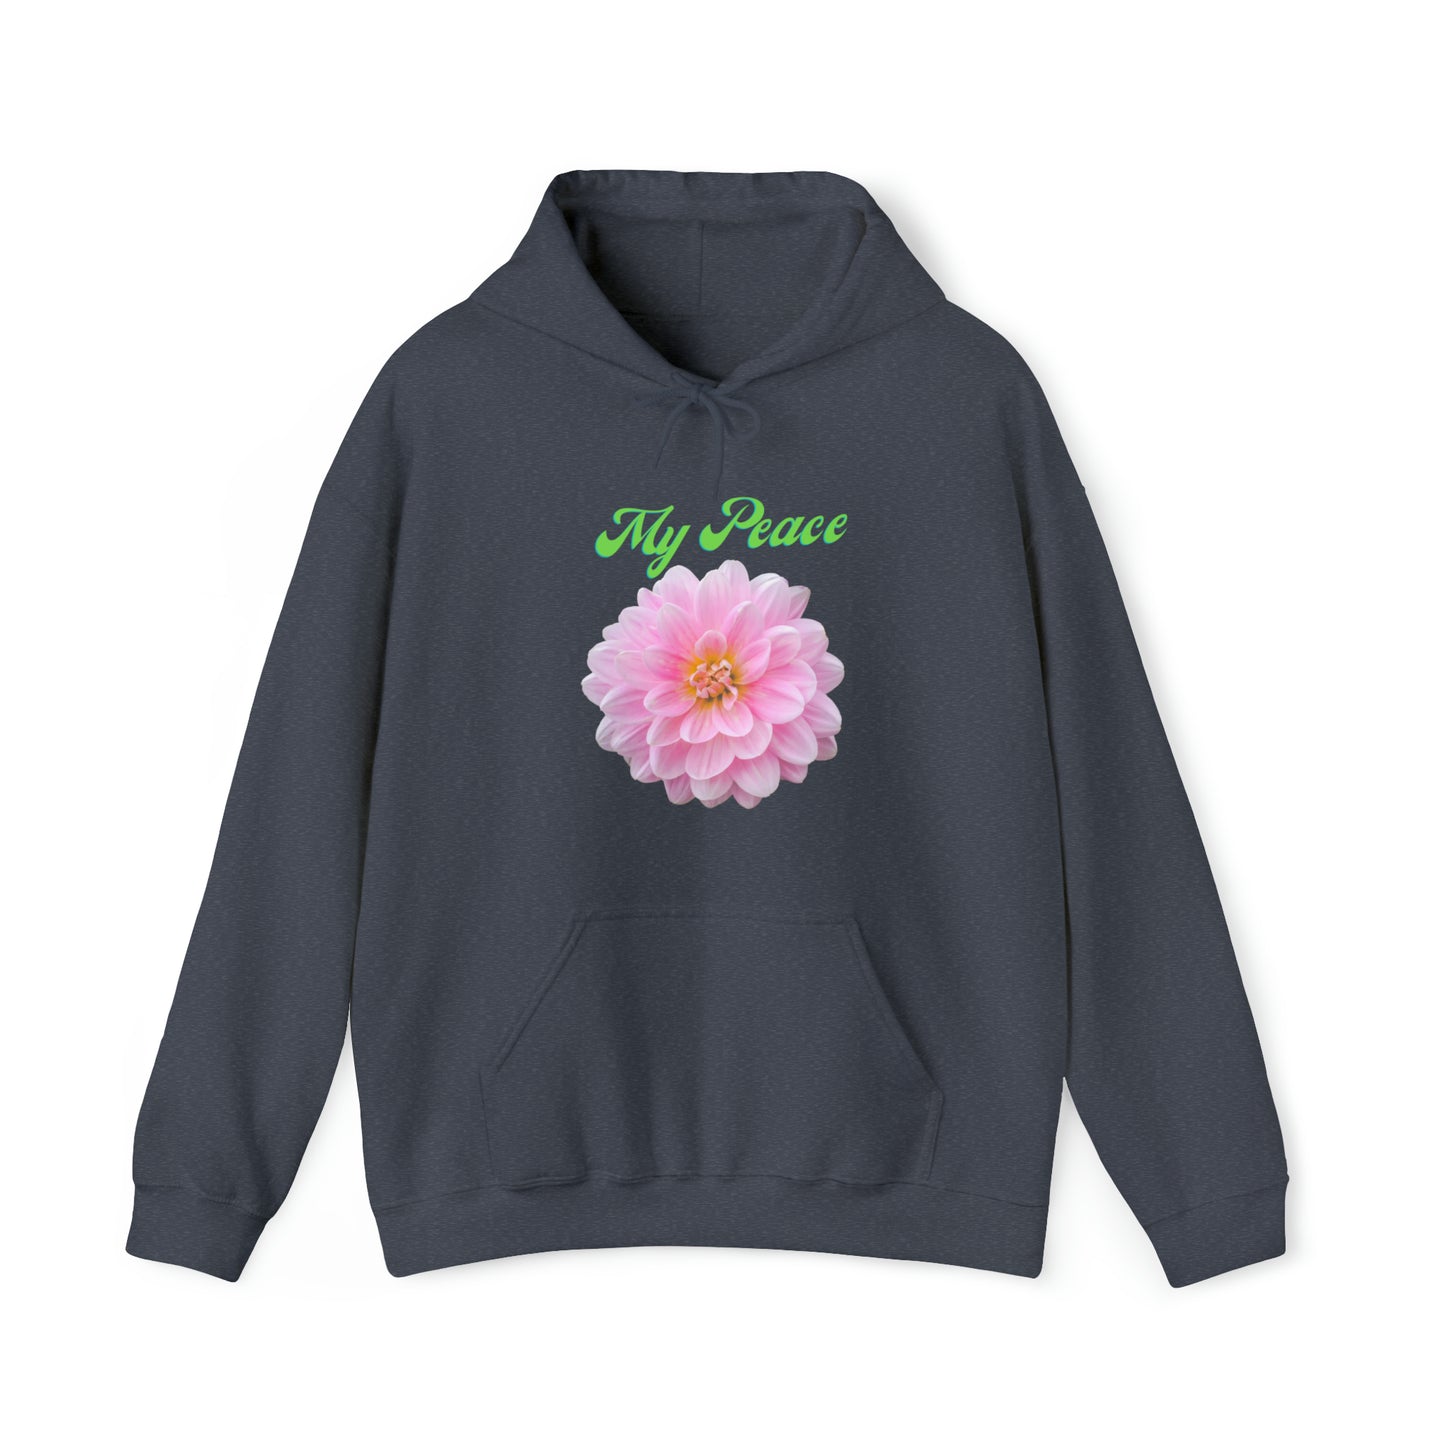 My Peace pink peony unisex hoodie gift